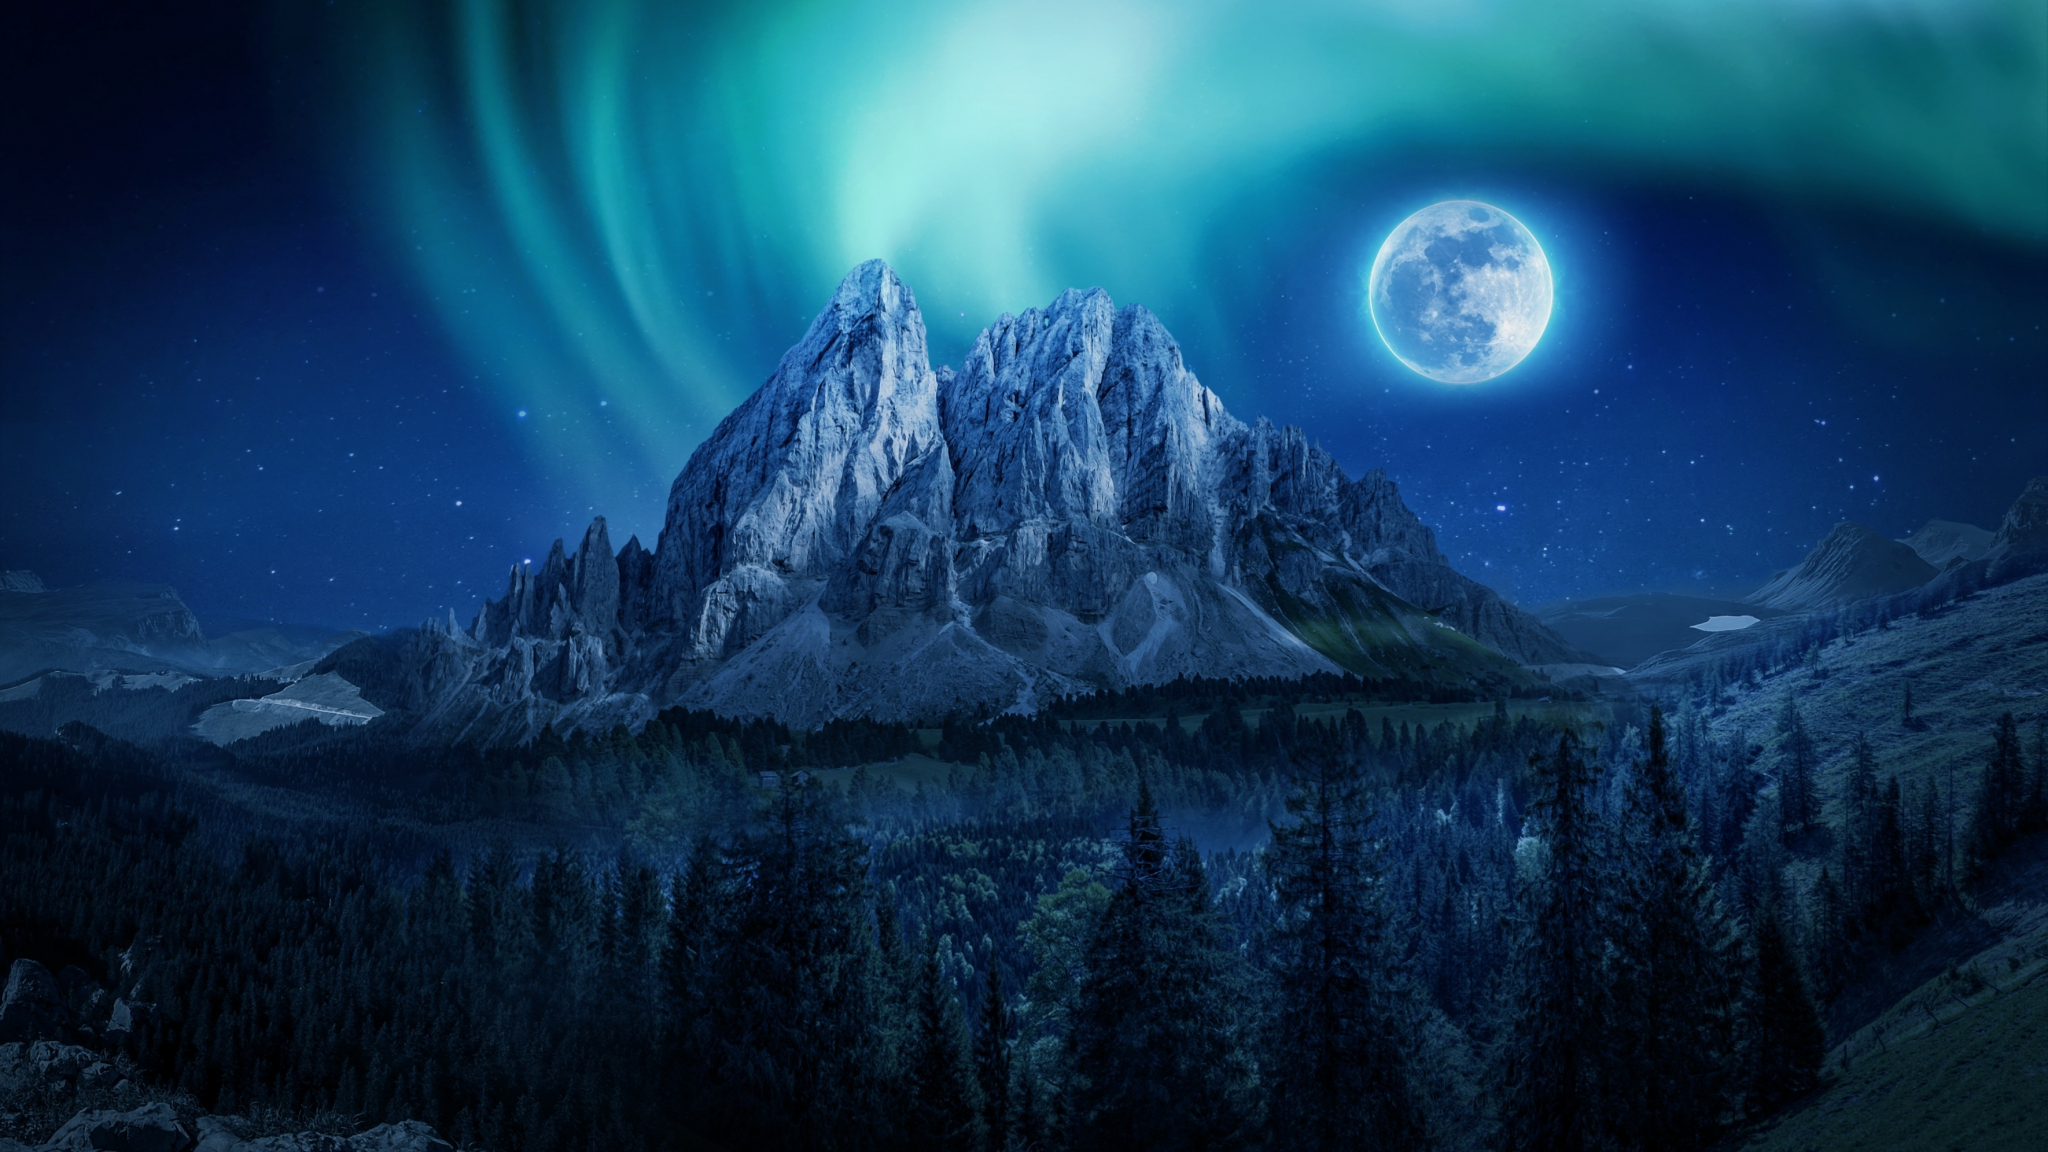 Download mountain, aurora, moon, night 2048x1152 wallpaper, dual wide 2048x1152 HD image, background, 19029